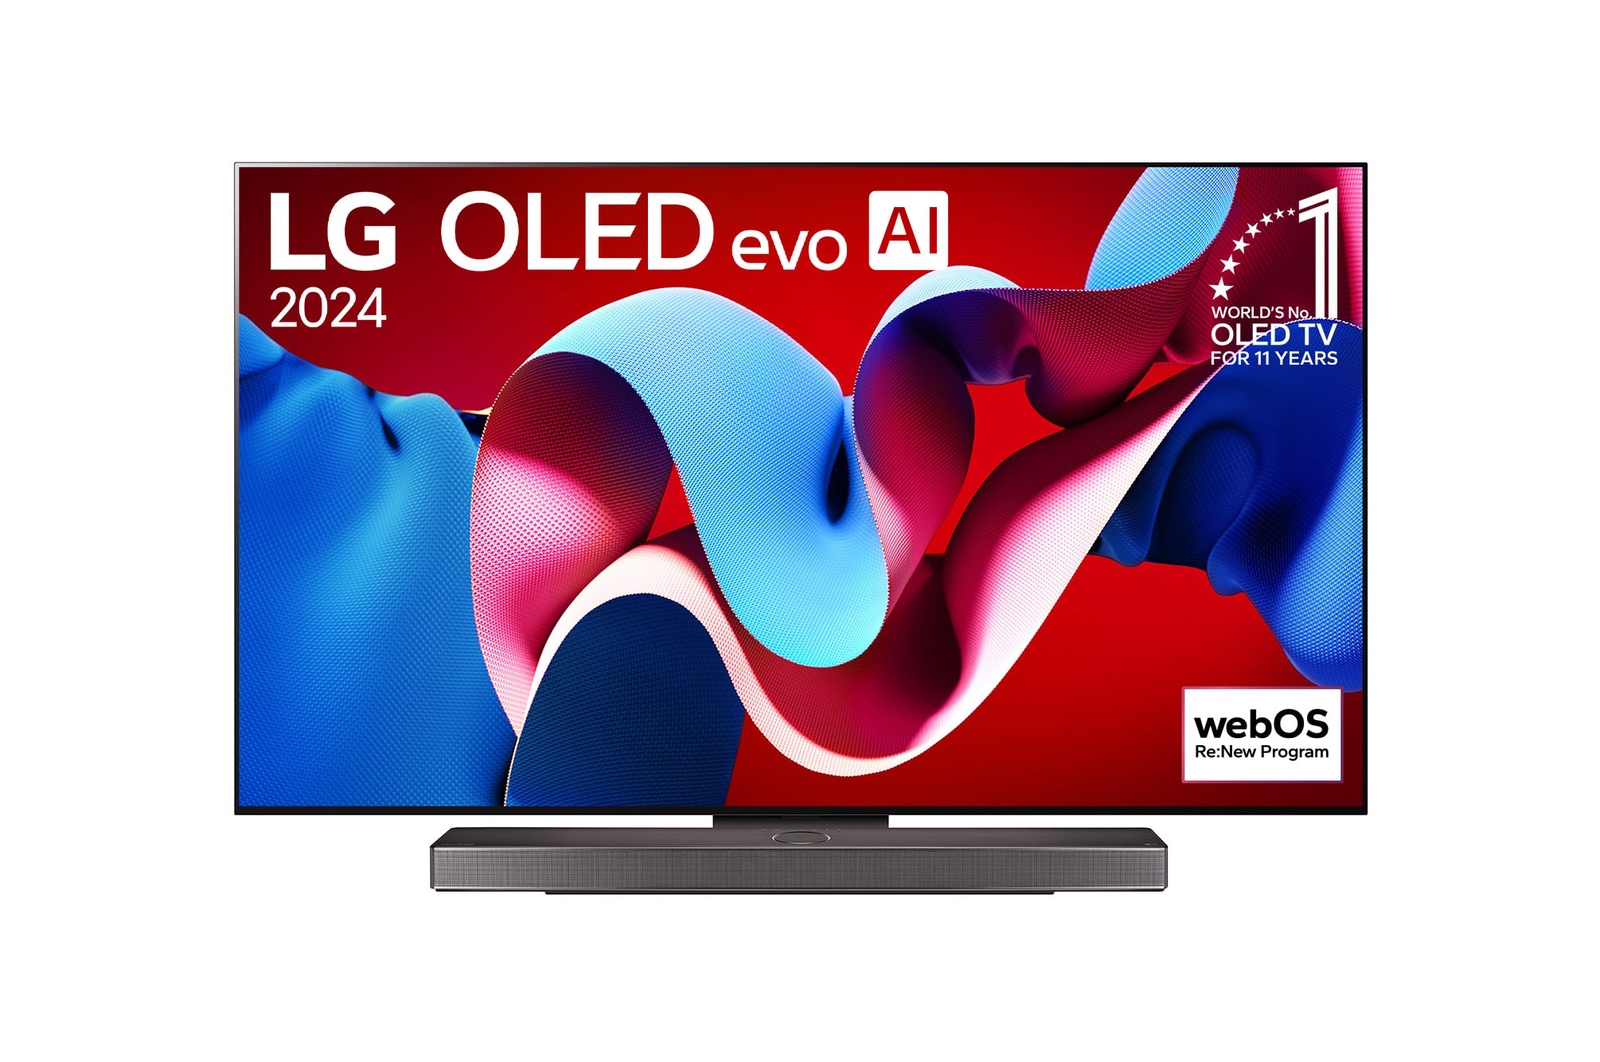 Tampak depan dengan TV AI LG OLED evo, OLED C4, Emblem OLED nomor 1 dunia selama 11 Tahun dan webOS Re:Logo New Program di layar, serta Soundbar di bawahnya